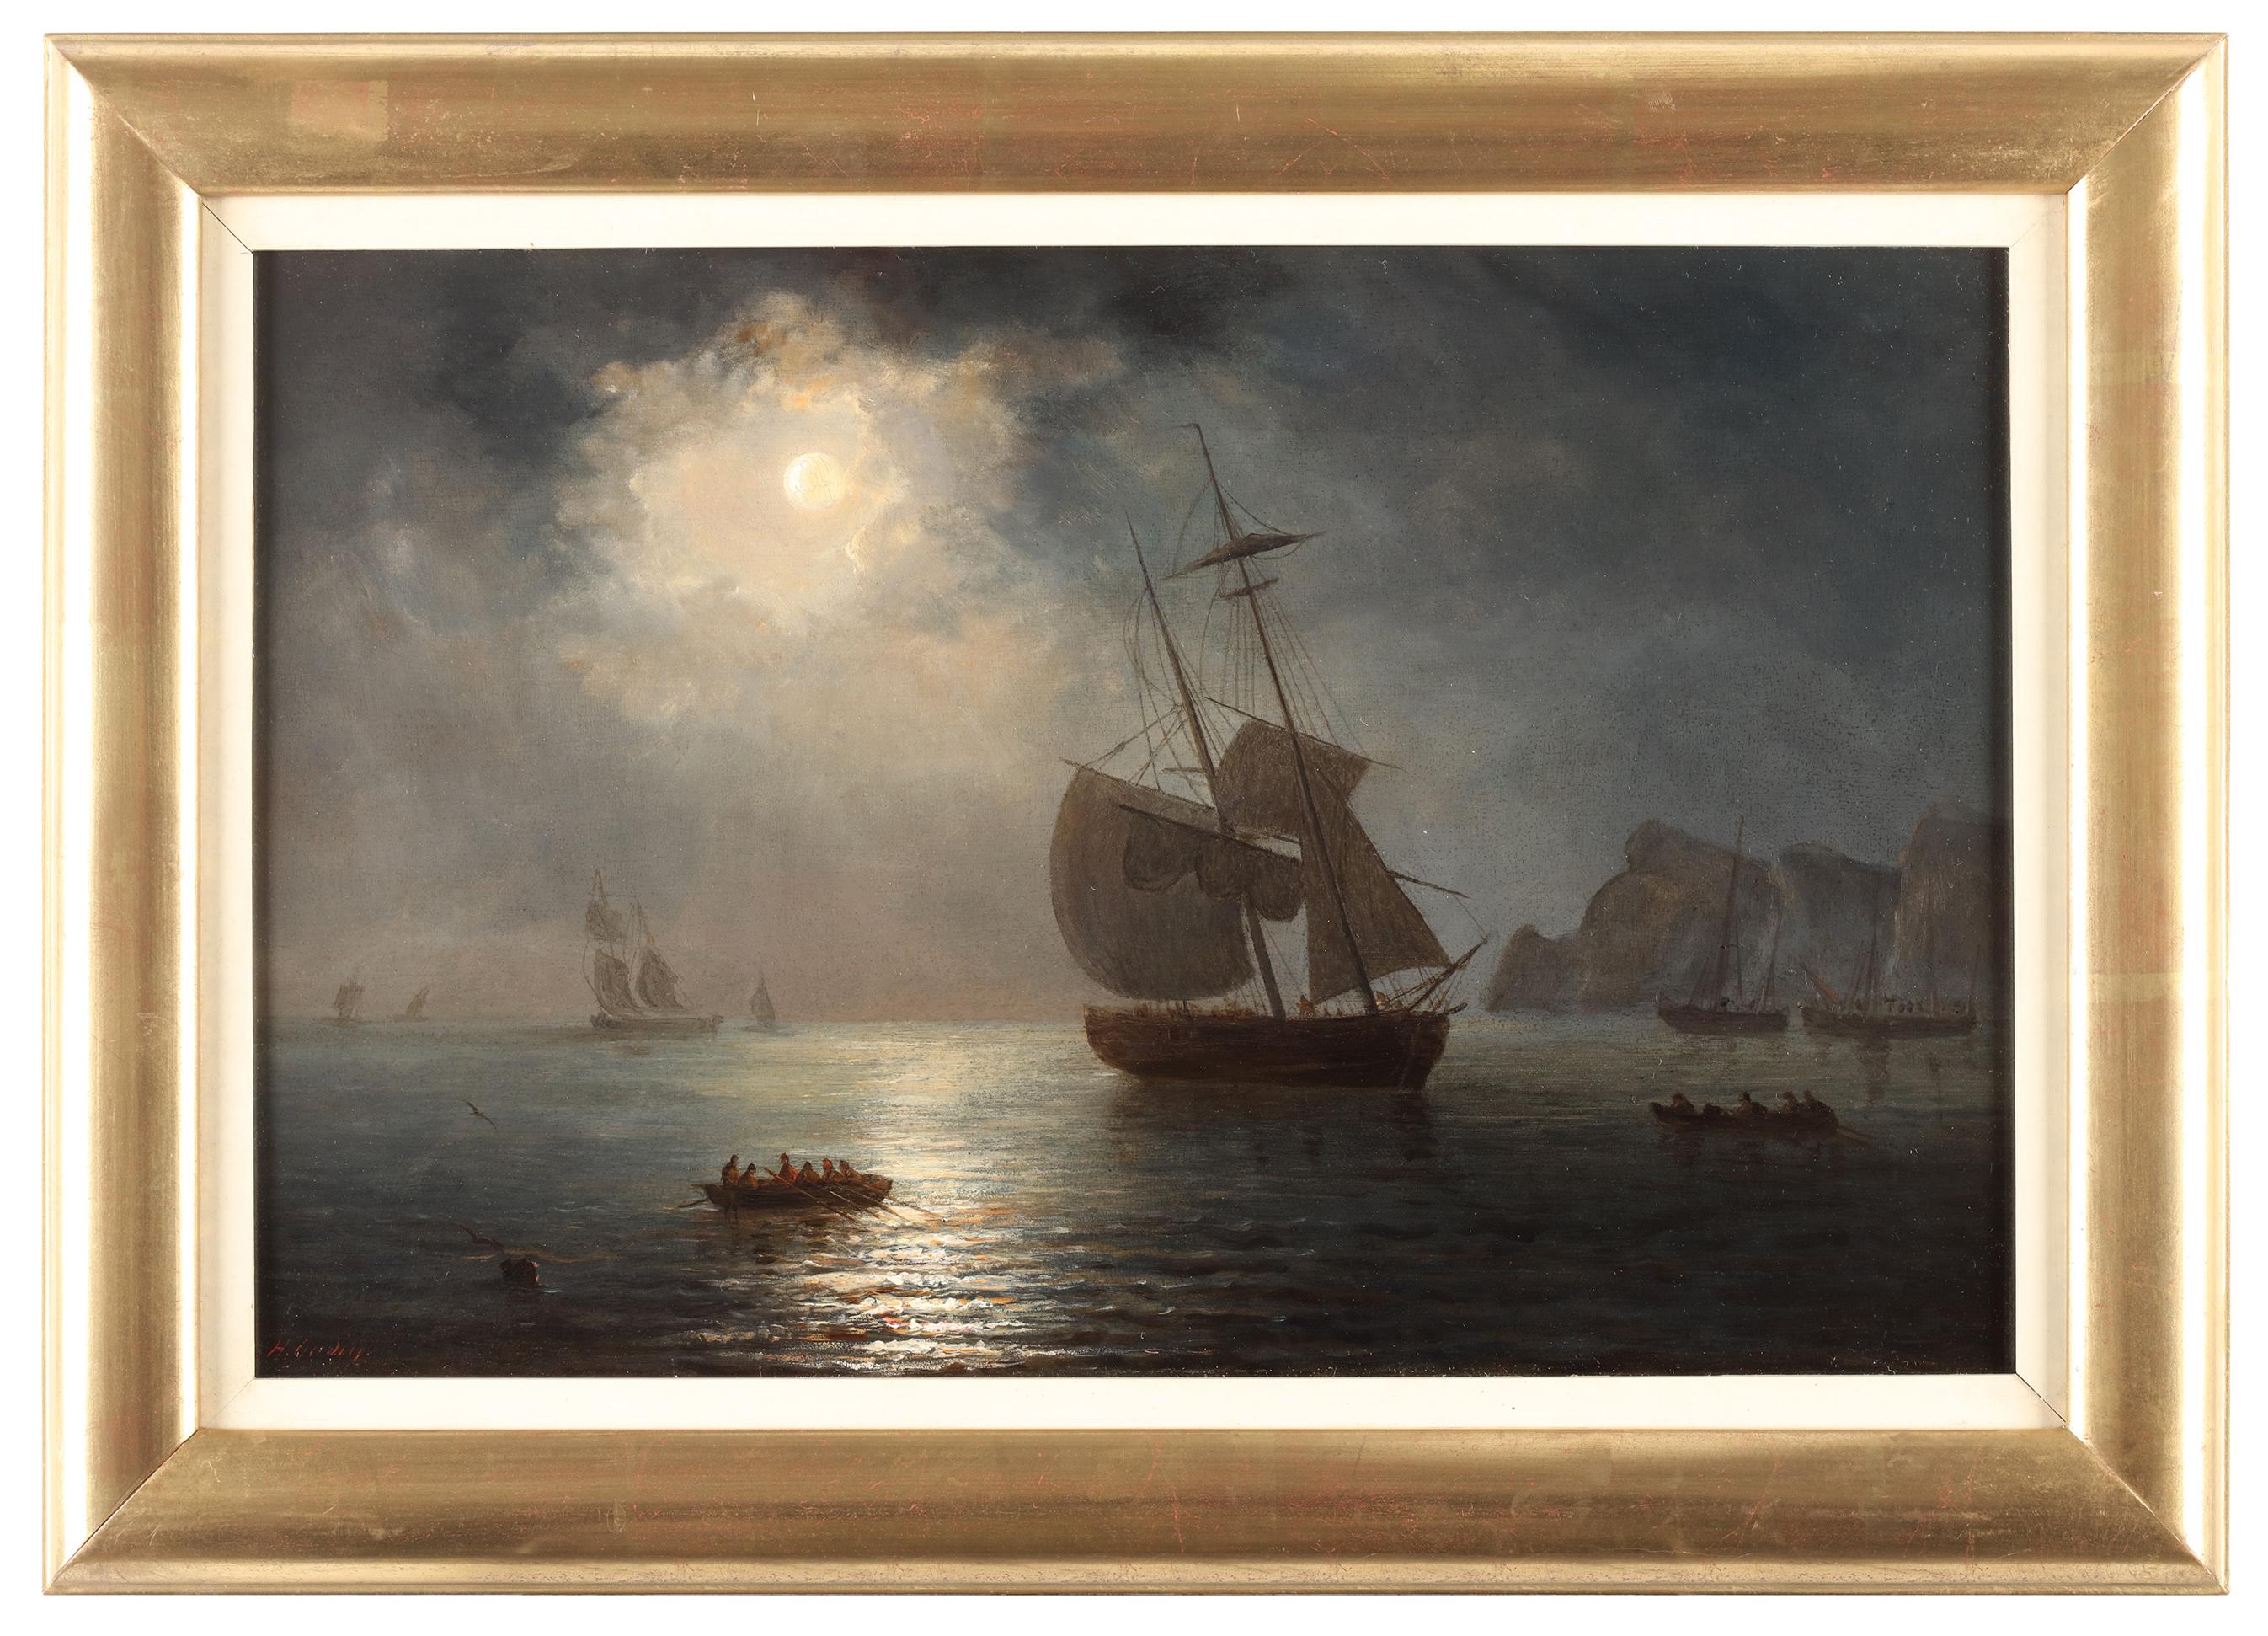 Ships in the moonlight - Henriette Gudin (1825-1876) 1